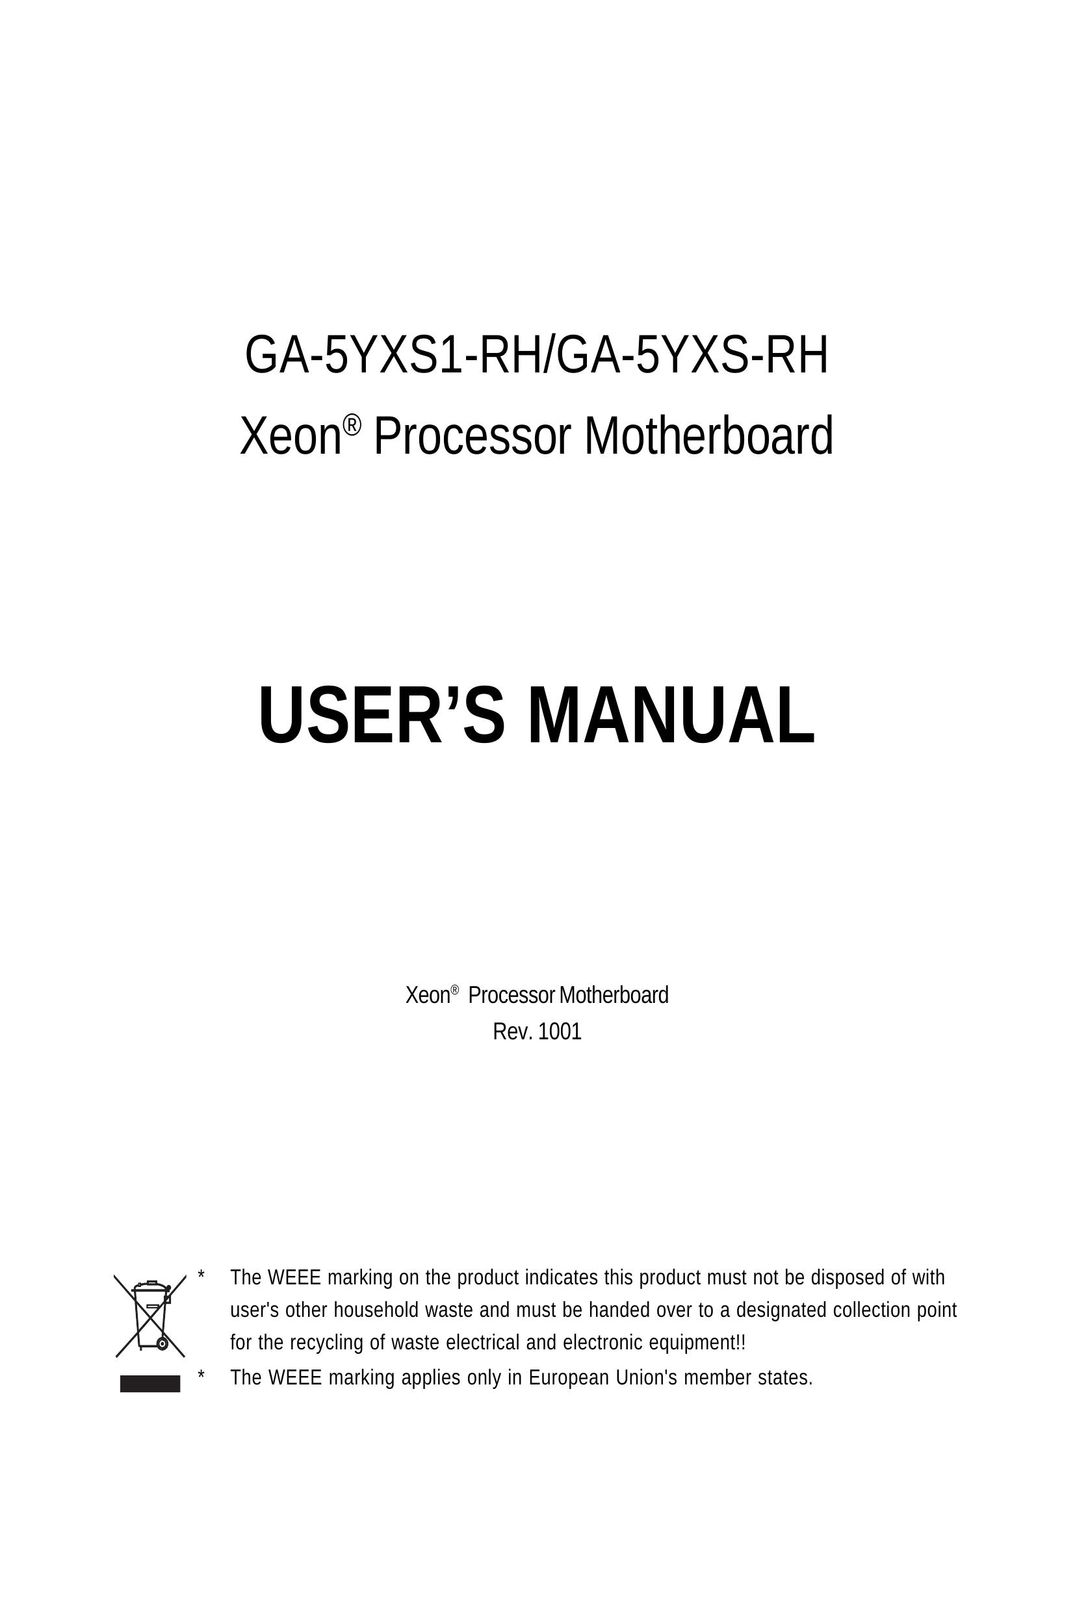 Gigabyte GA-5YXS-RH Network Card User Manual